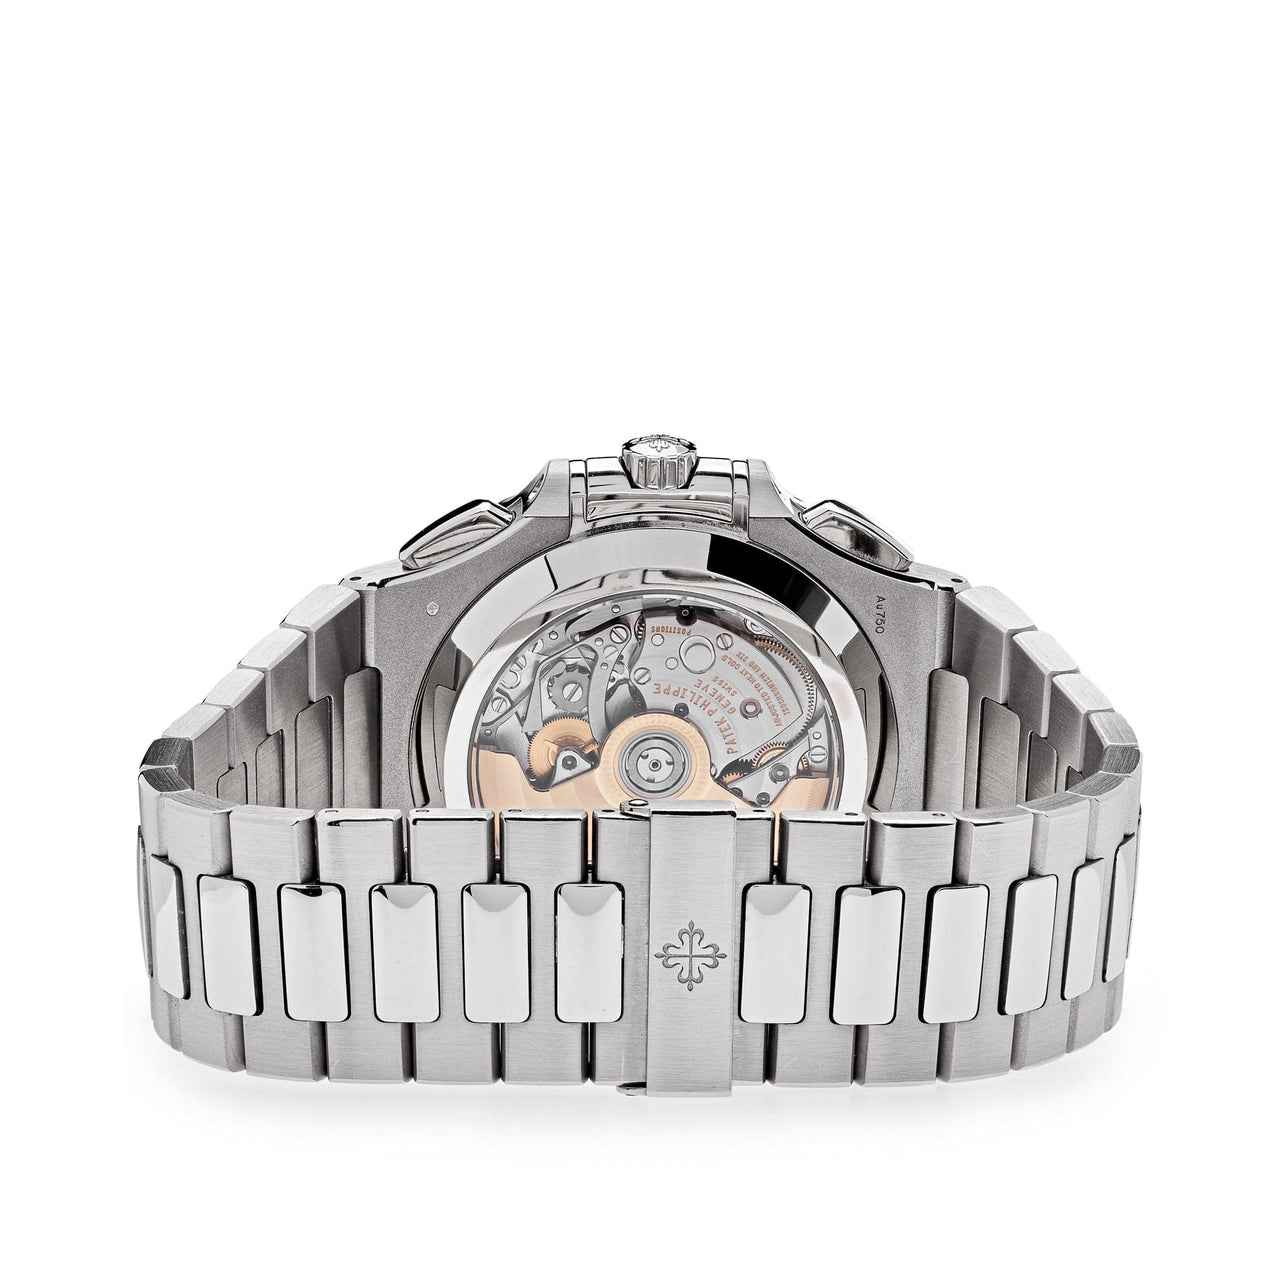 Luxury Watch Patek Philippe Nautilus 40th Anniversary White Gold Blue Dial 5976/1G-001 (2017) Wrist Aficionado